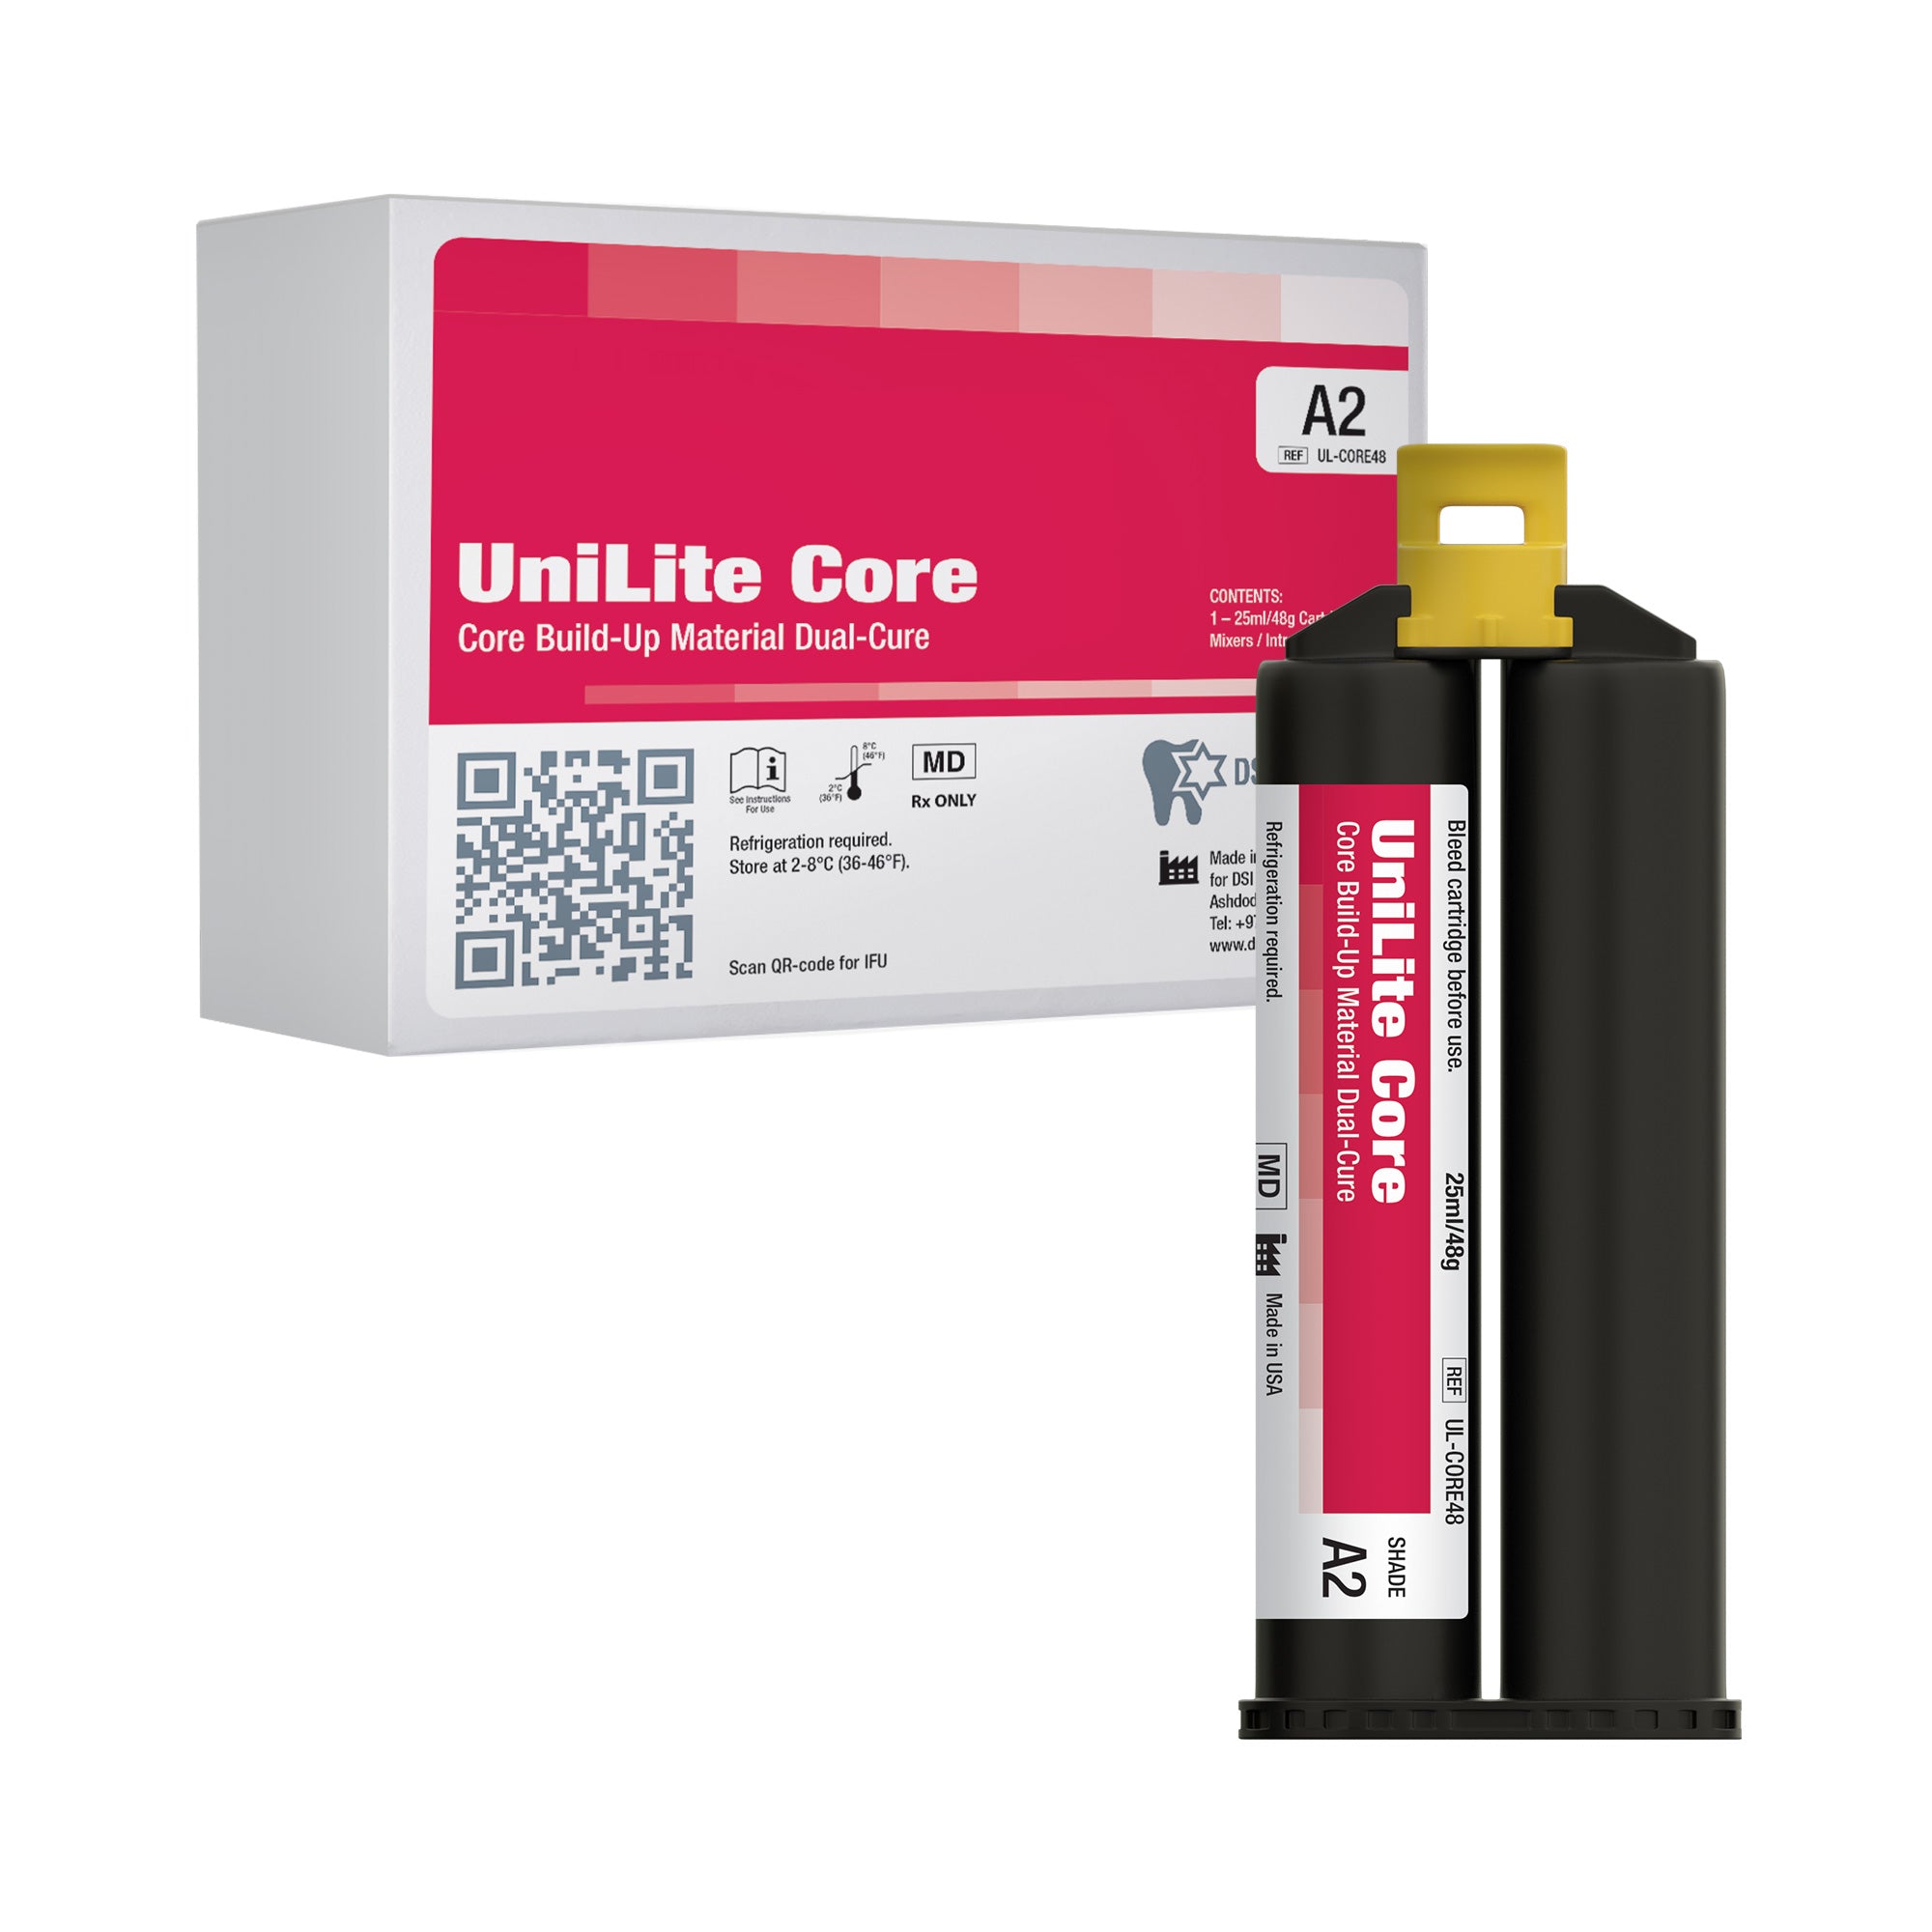 DSI UniLite Core Dual-Curing Core Build Up Material Automix Cartridge 48g